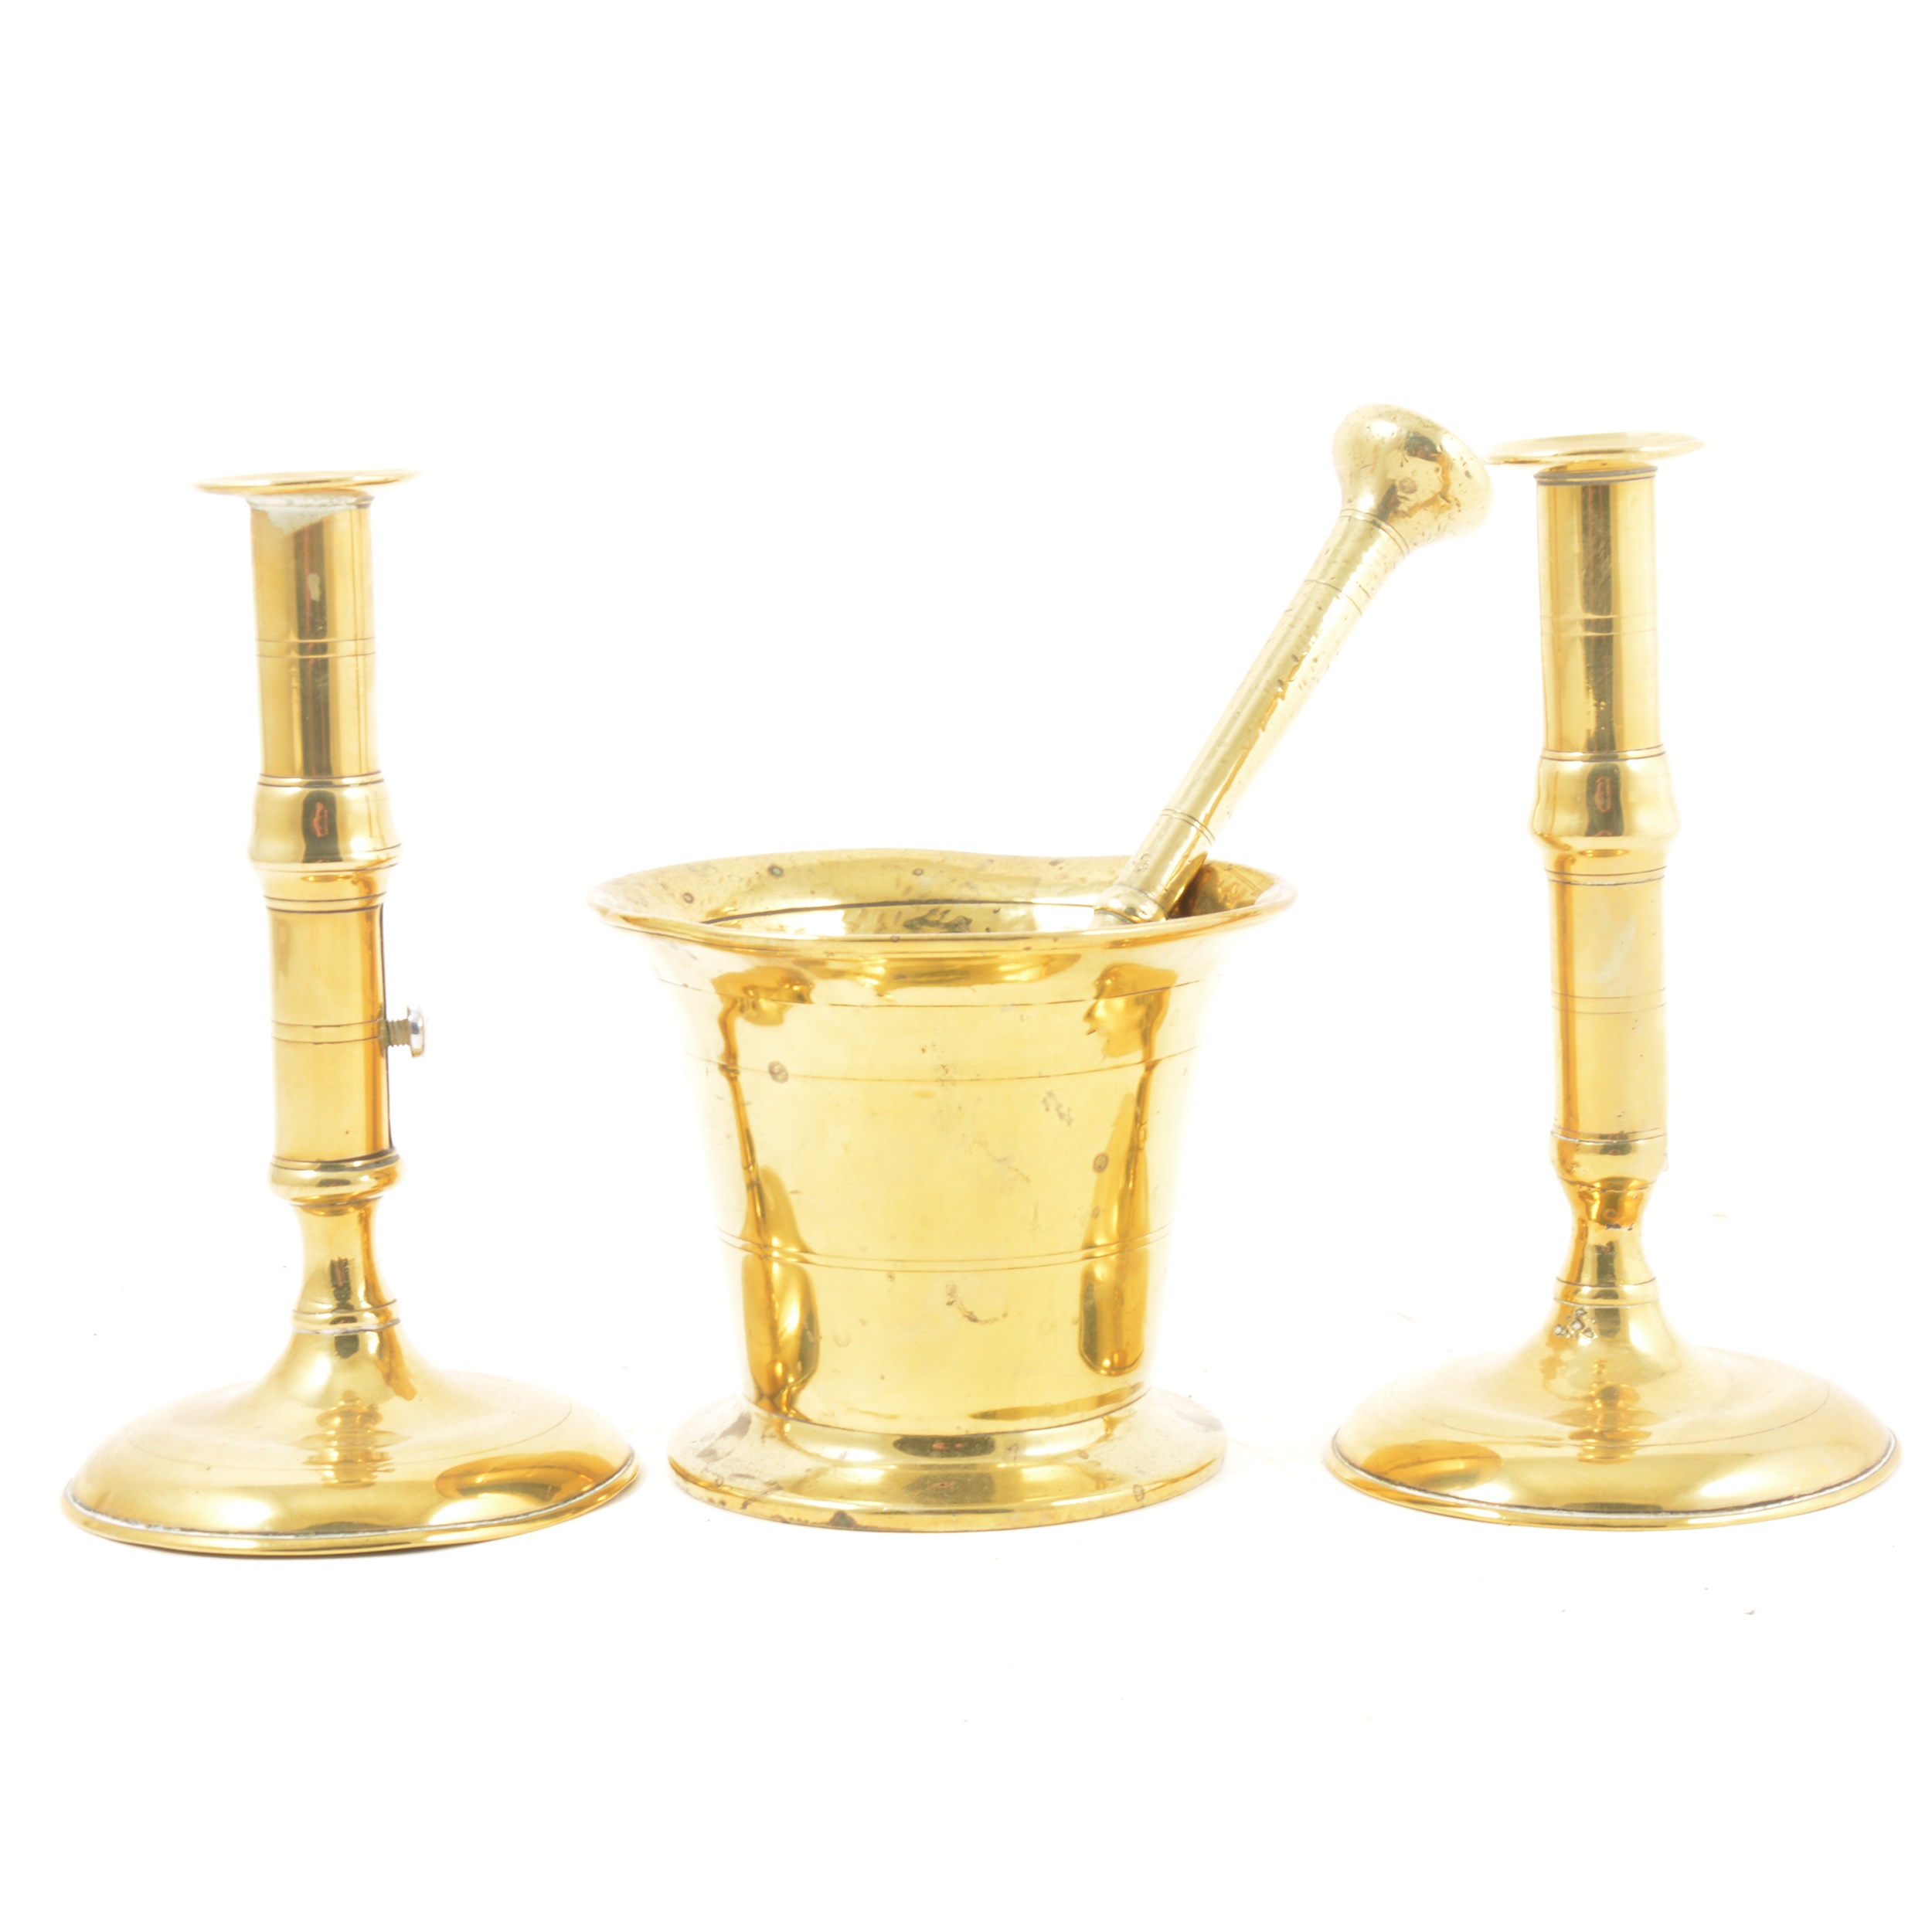 Brass pestle and mortar and a brass candlesticks